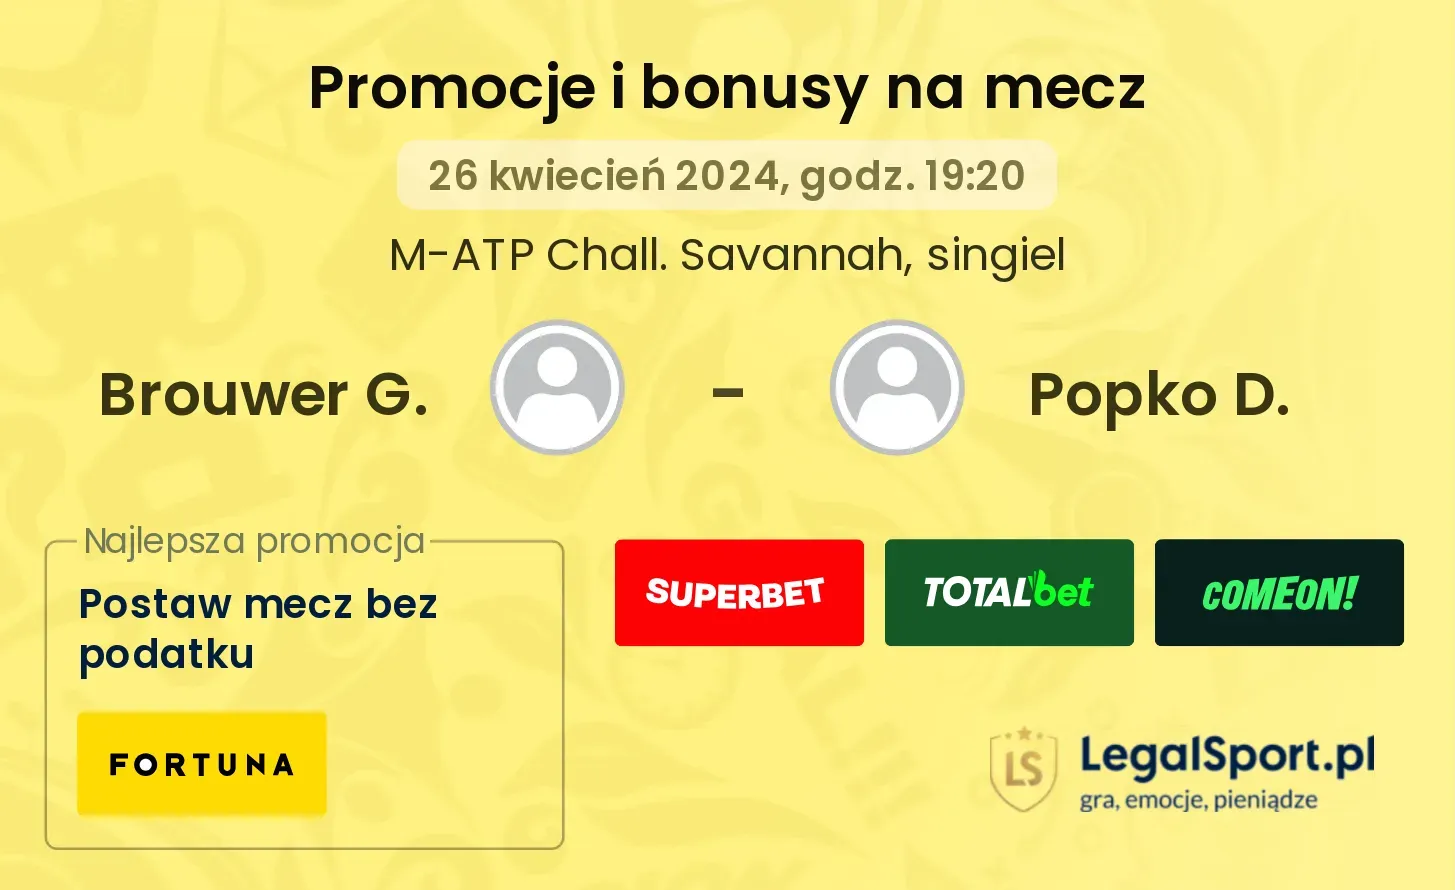 Brouwer G. - Popko D. promocje bonusy na mecz